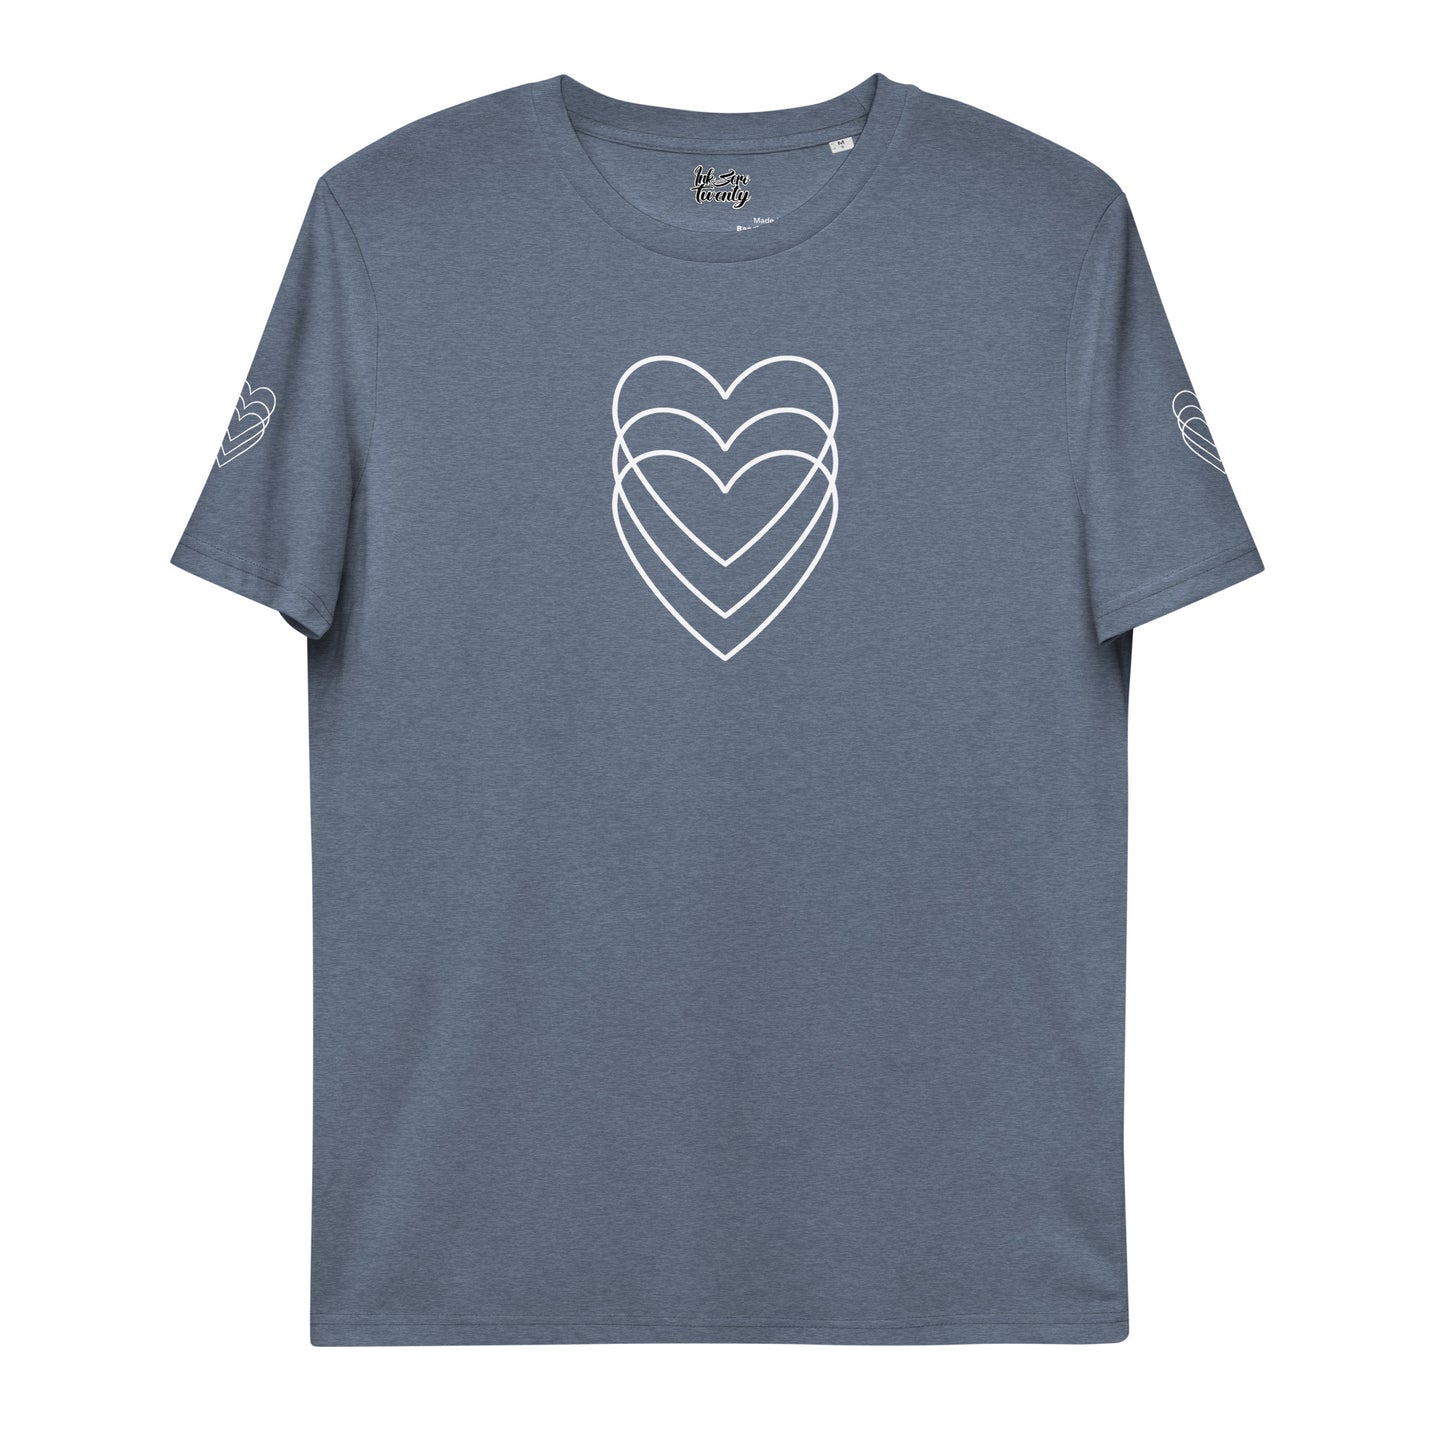 Unisex organic cotton t-shirt white hearts tattoo print